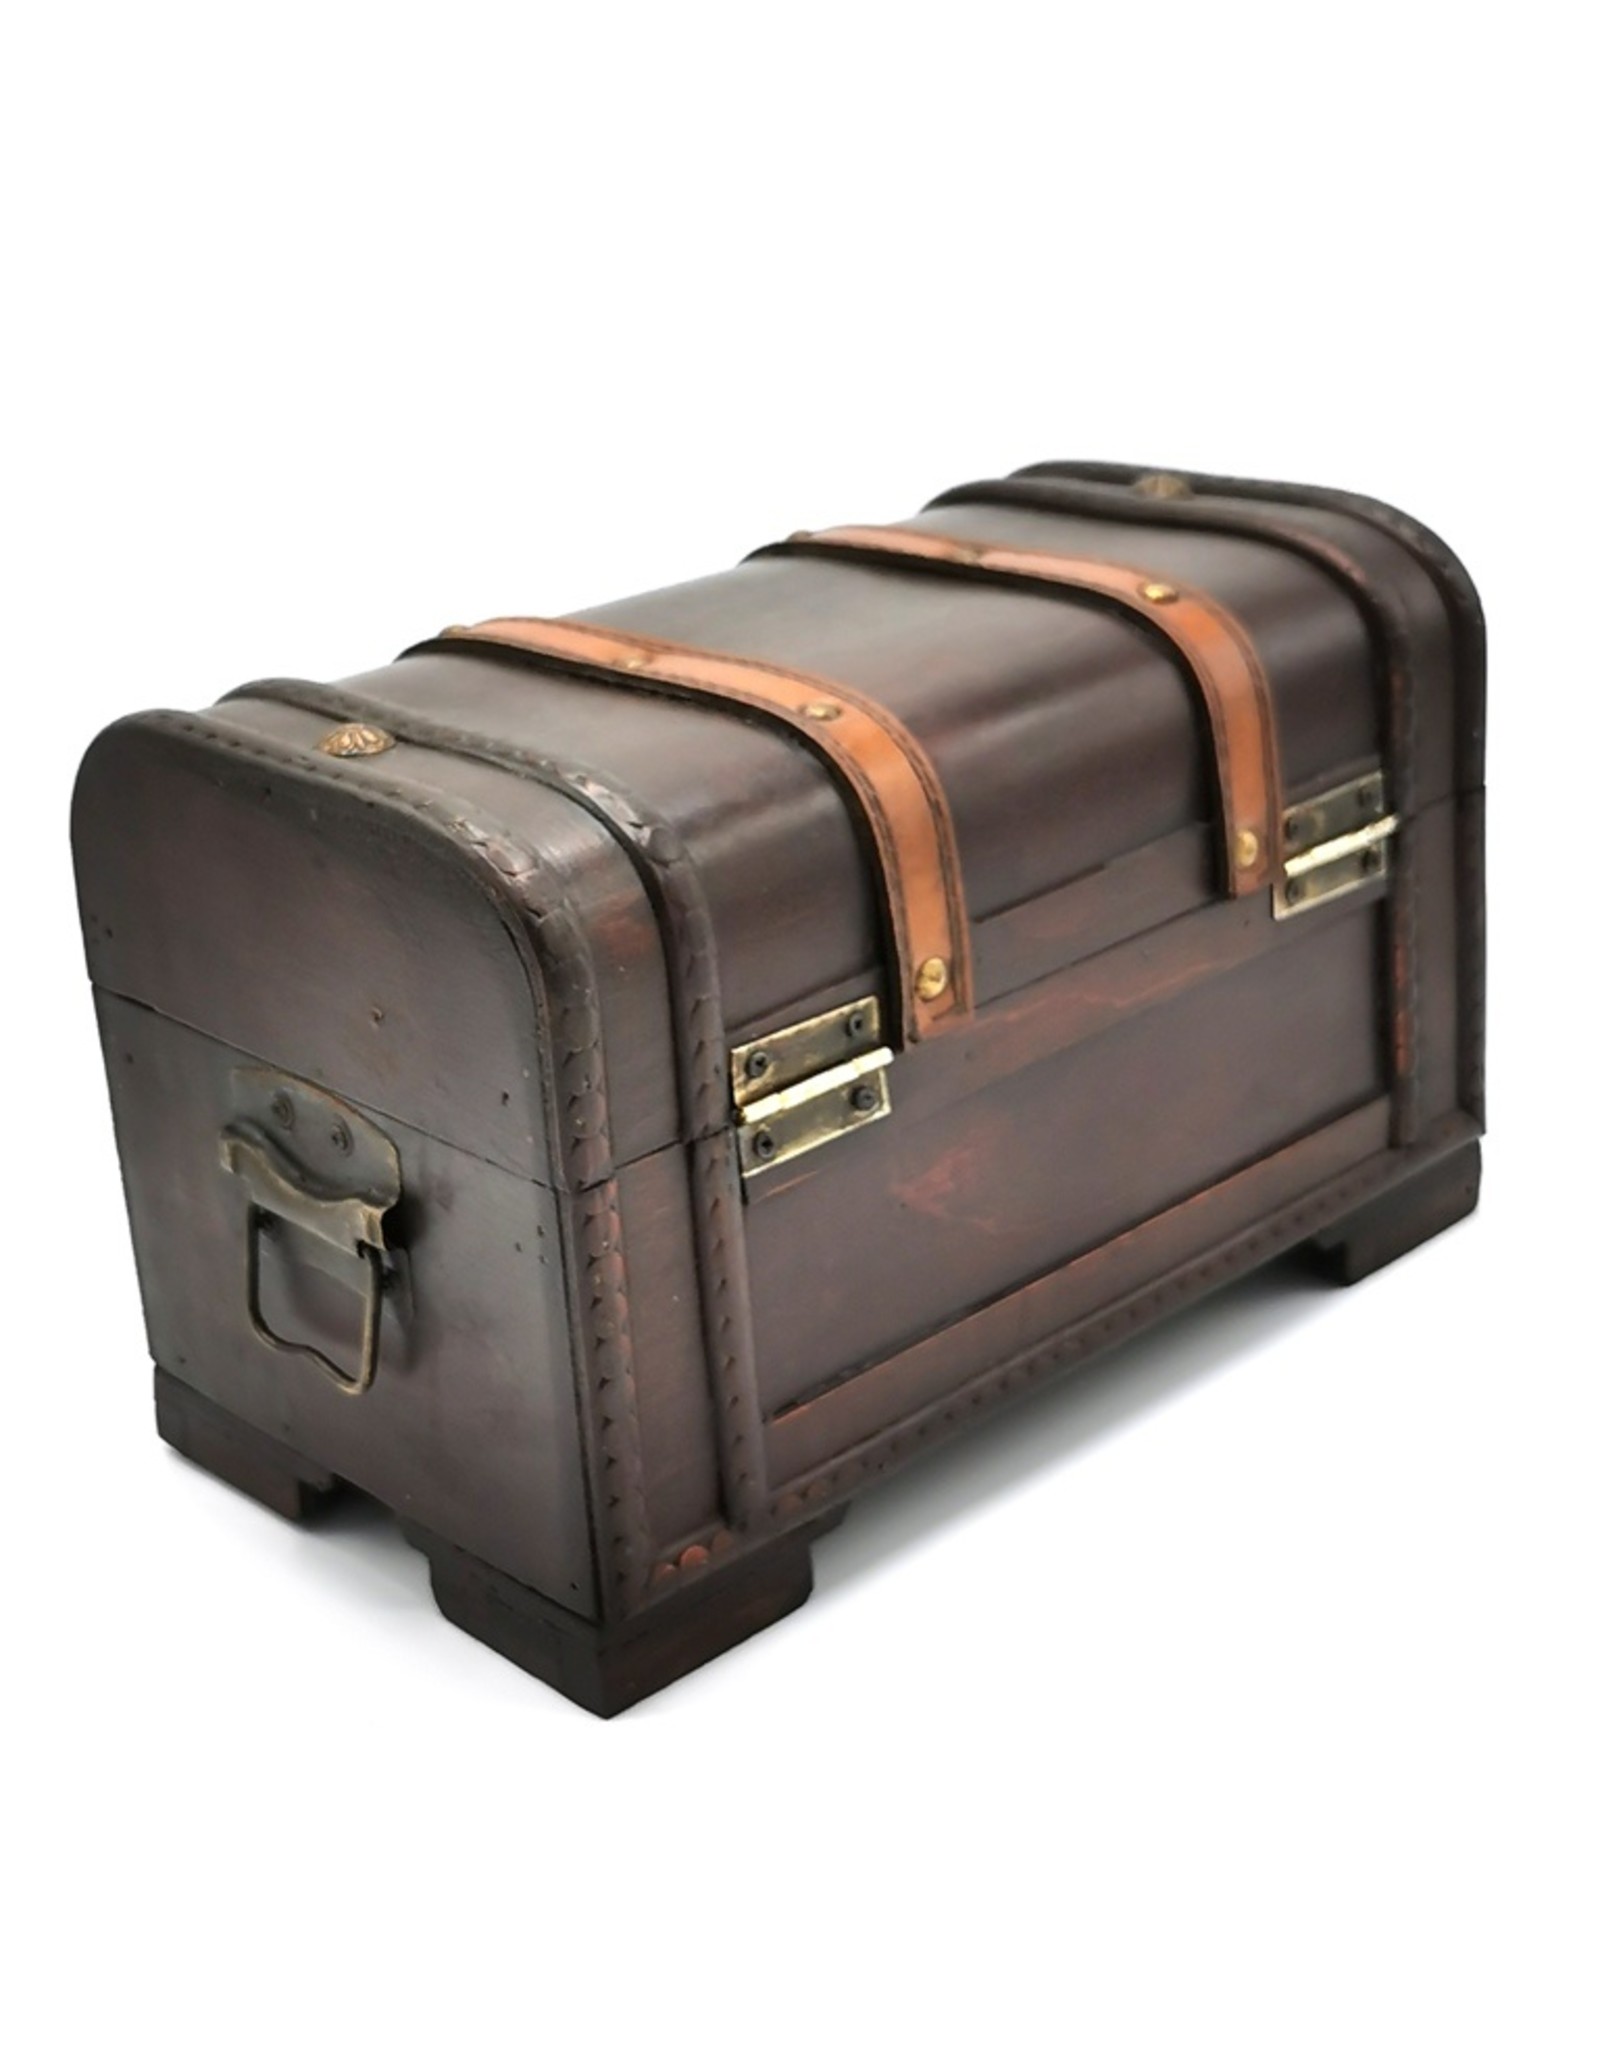 Trukado Miscellaneous - Treasure chest on feet Medium 28cm x 17cm x 17cm